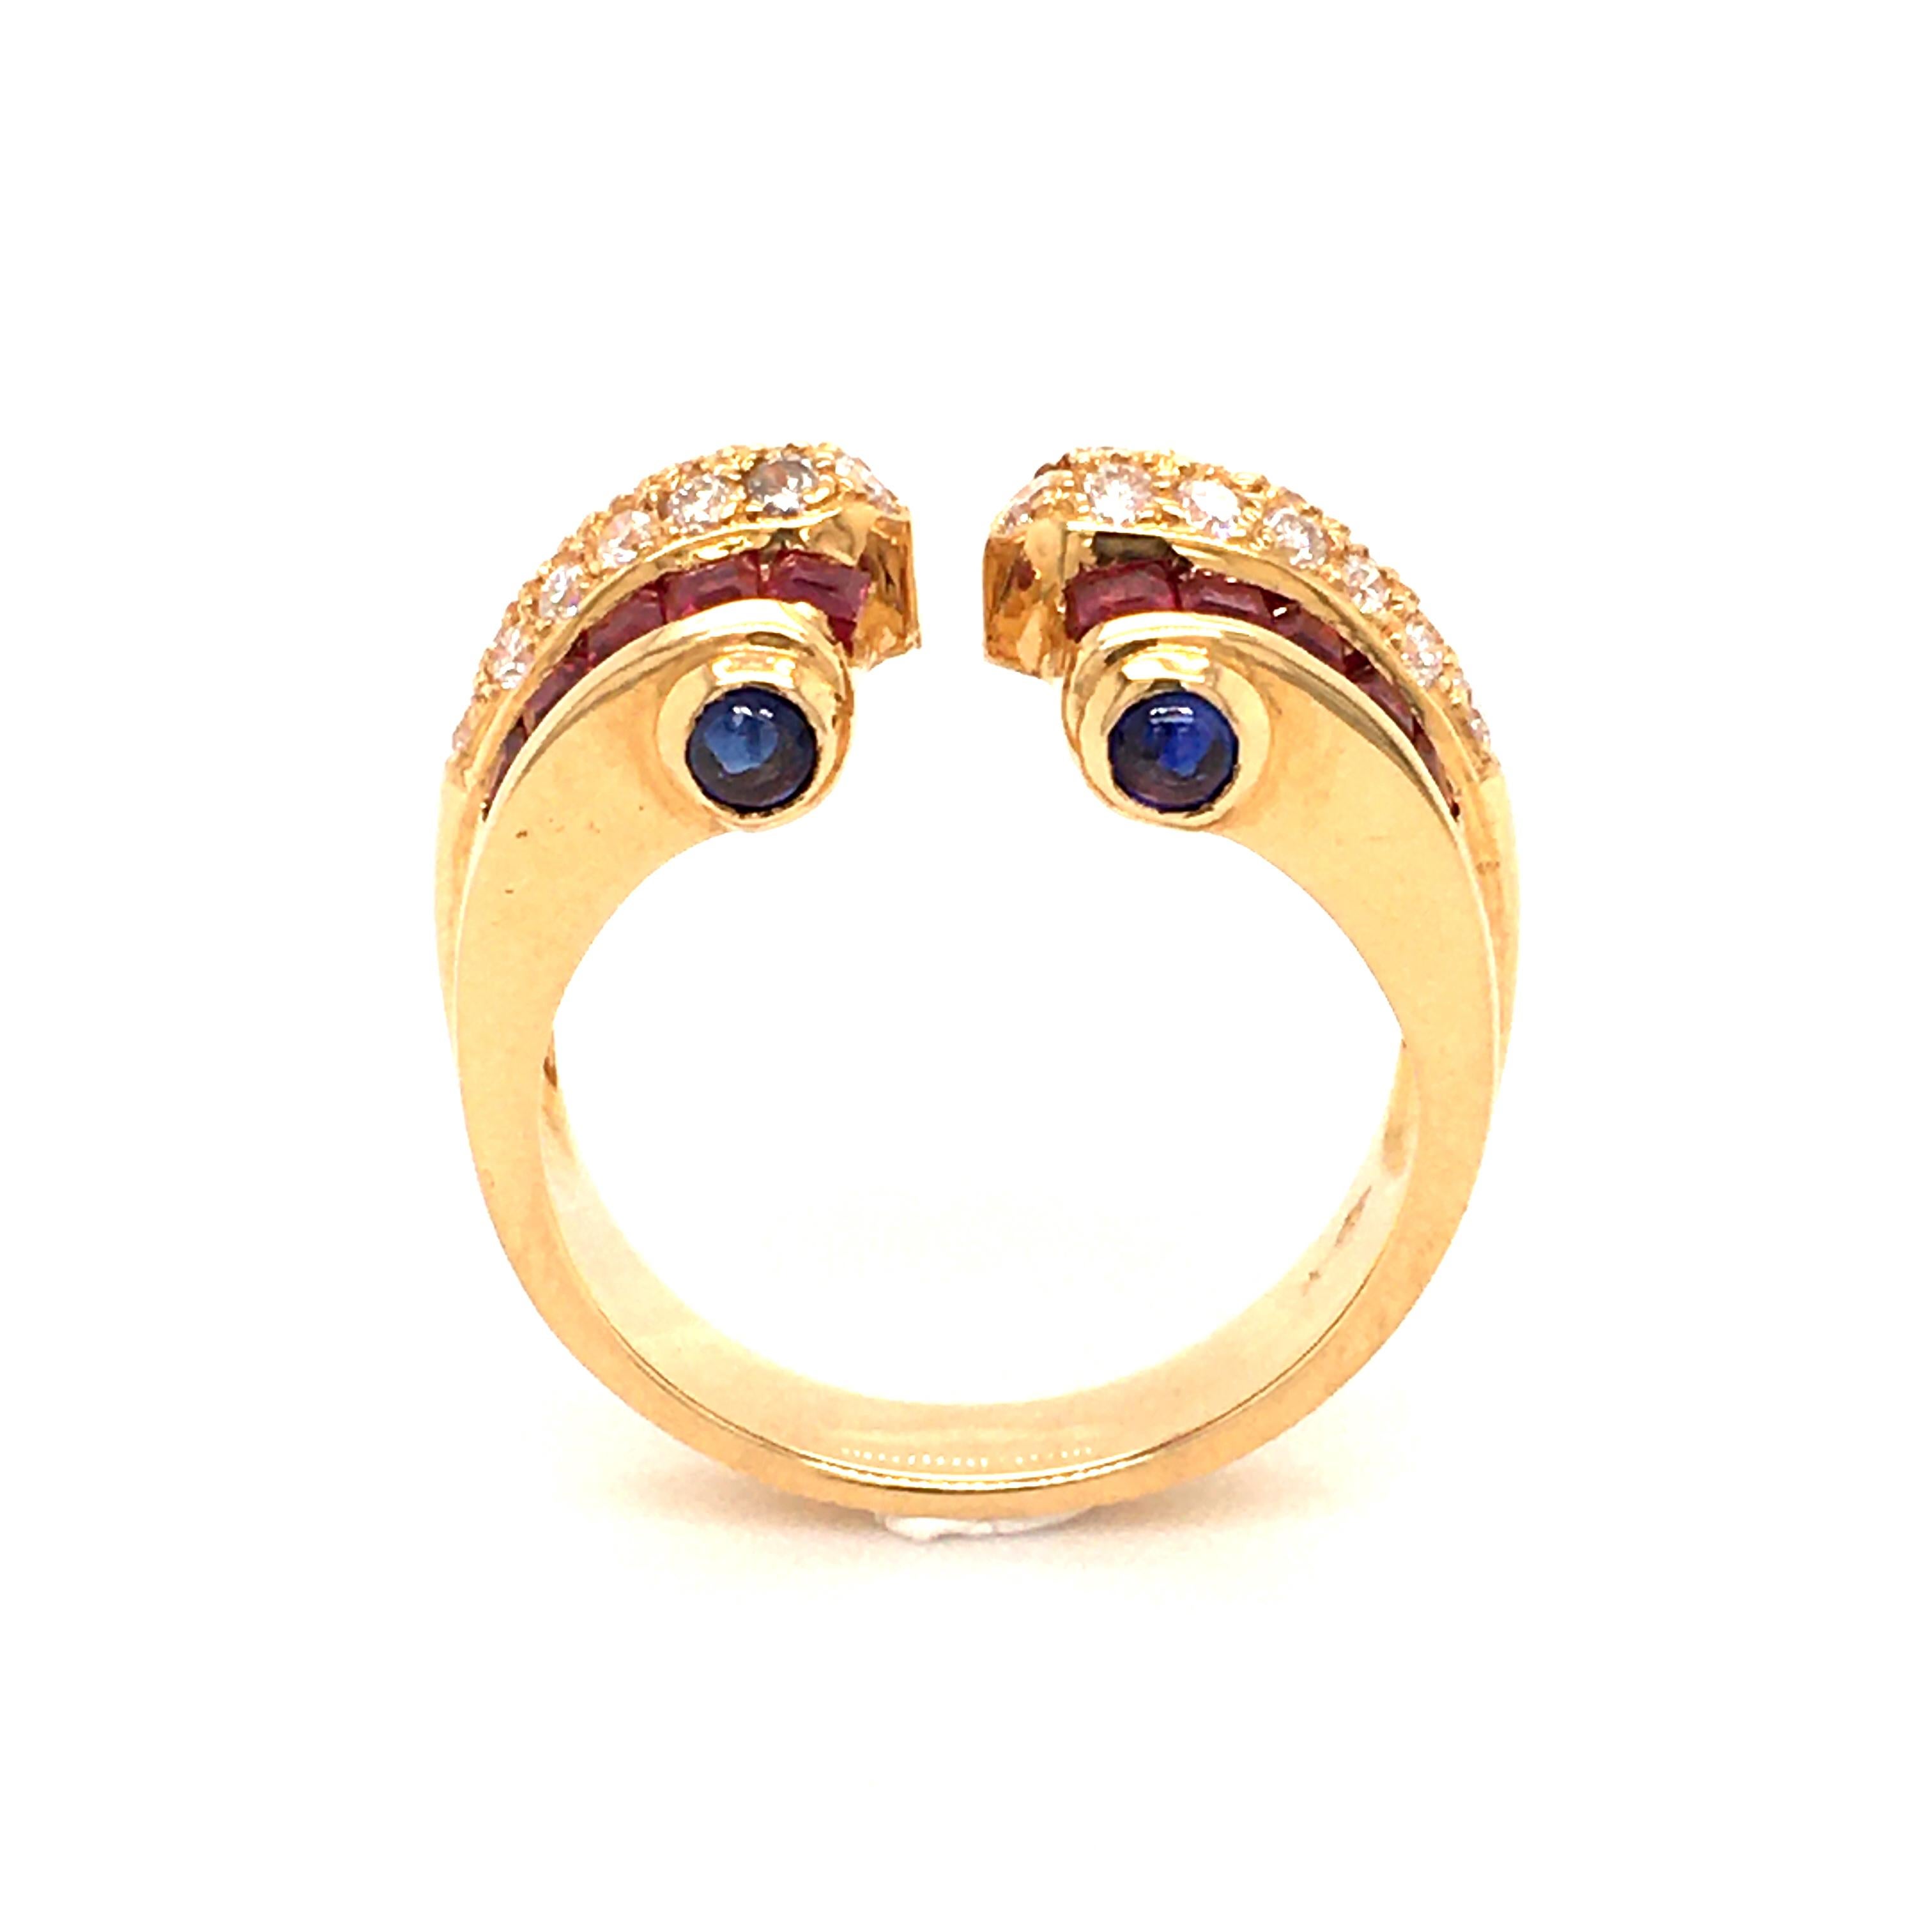 Ruby, Diamond and Sapphire Ring in 18 Karat Yellow Gold 1